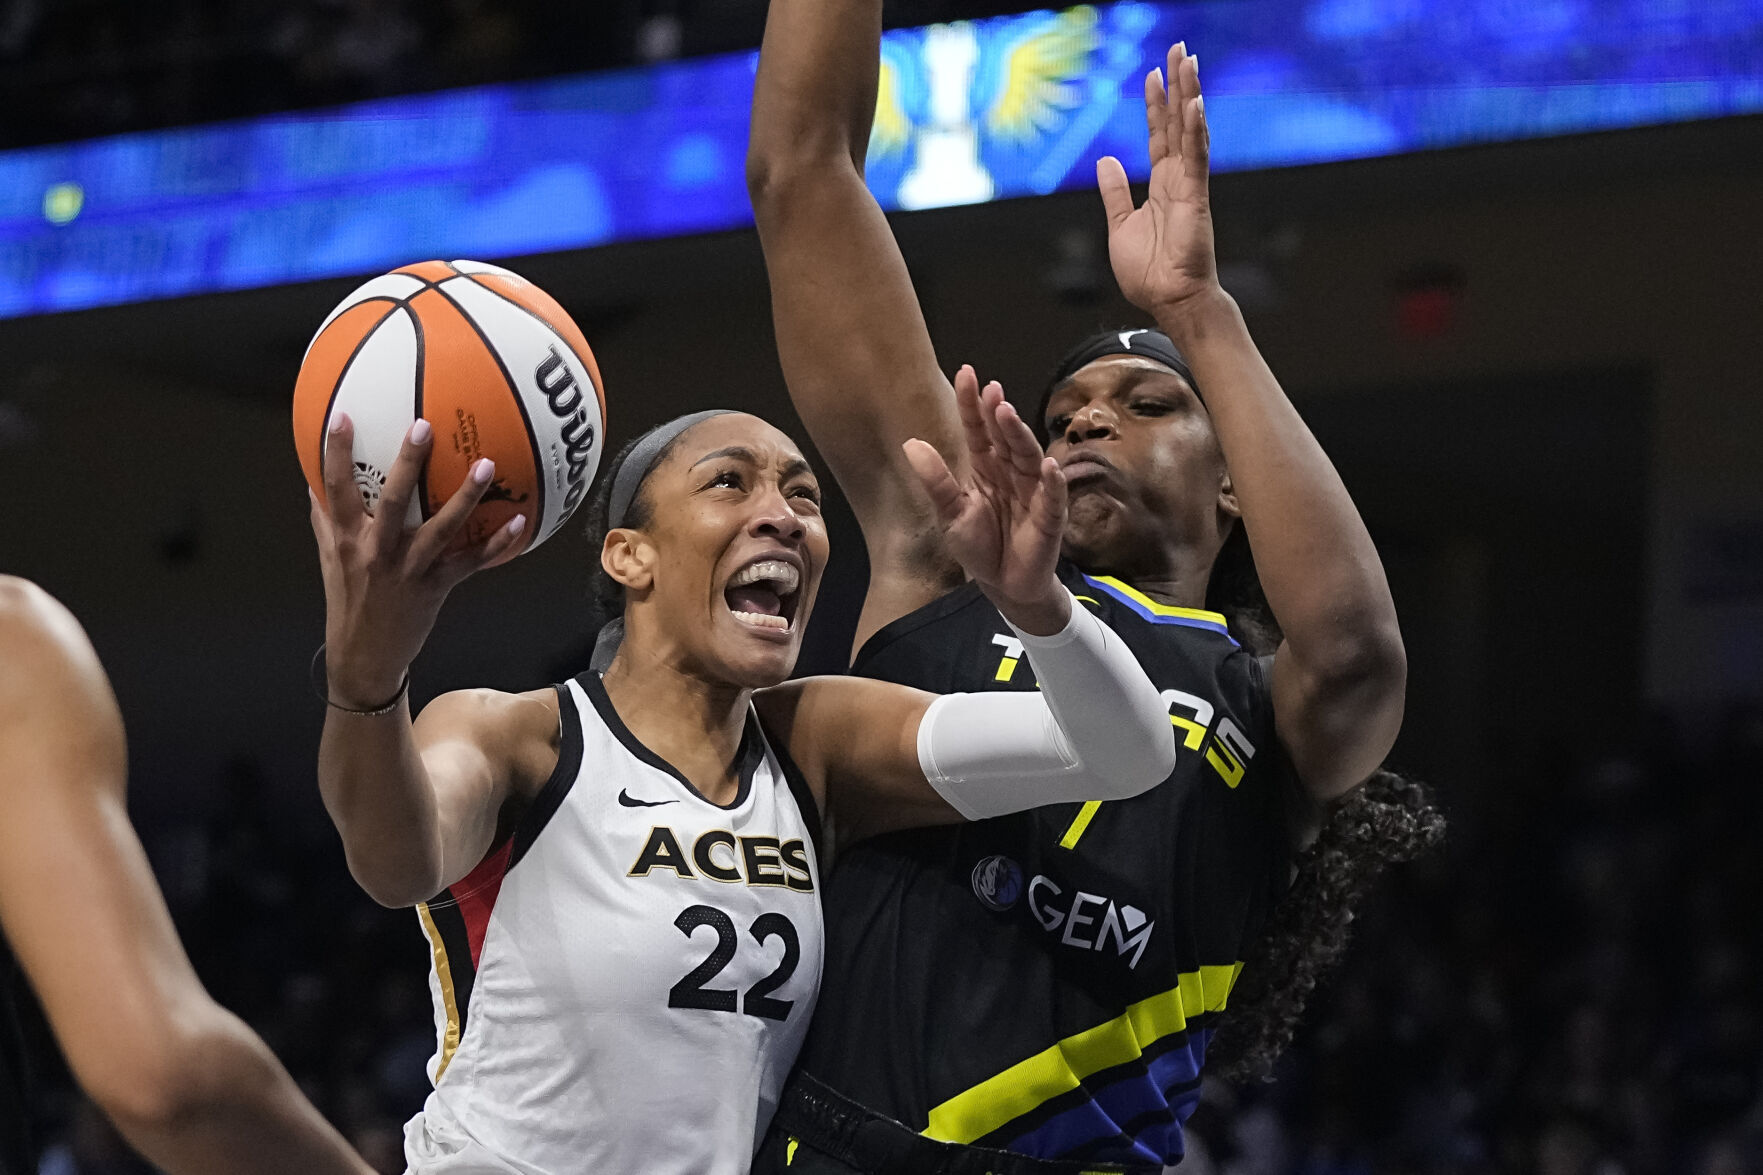 Defending champion Aces return to WNBA Finals pic